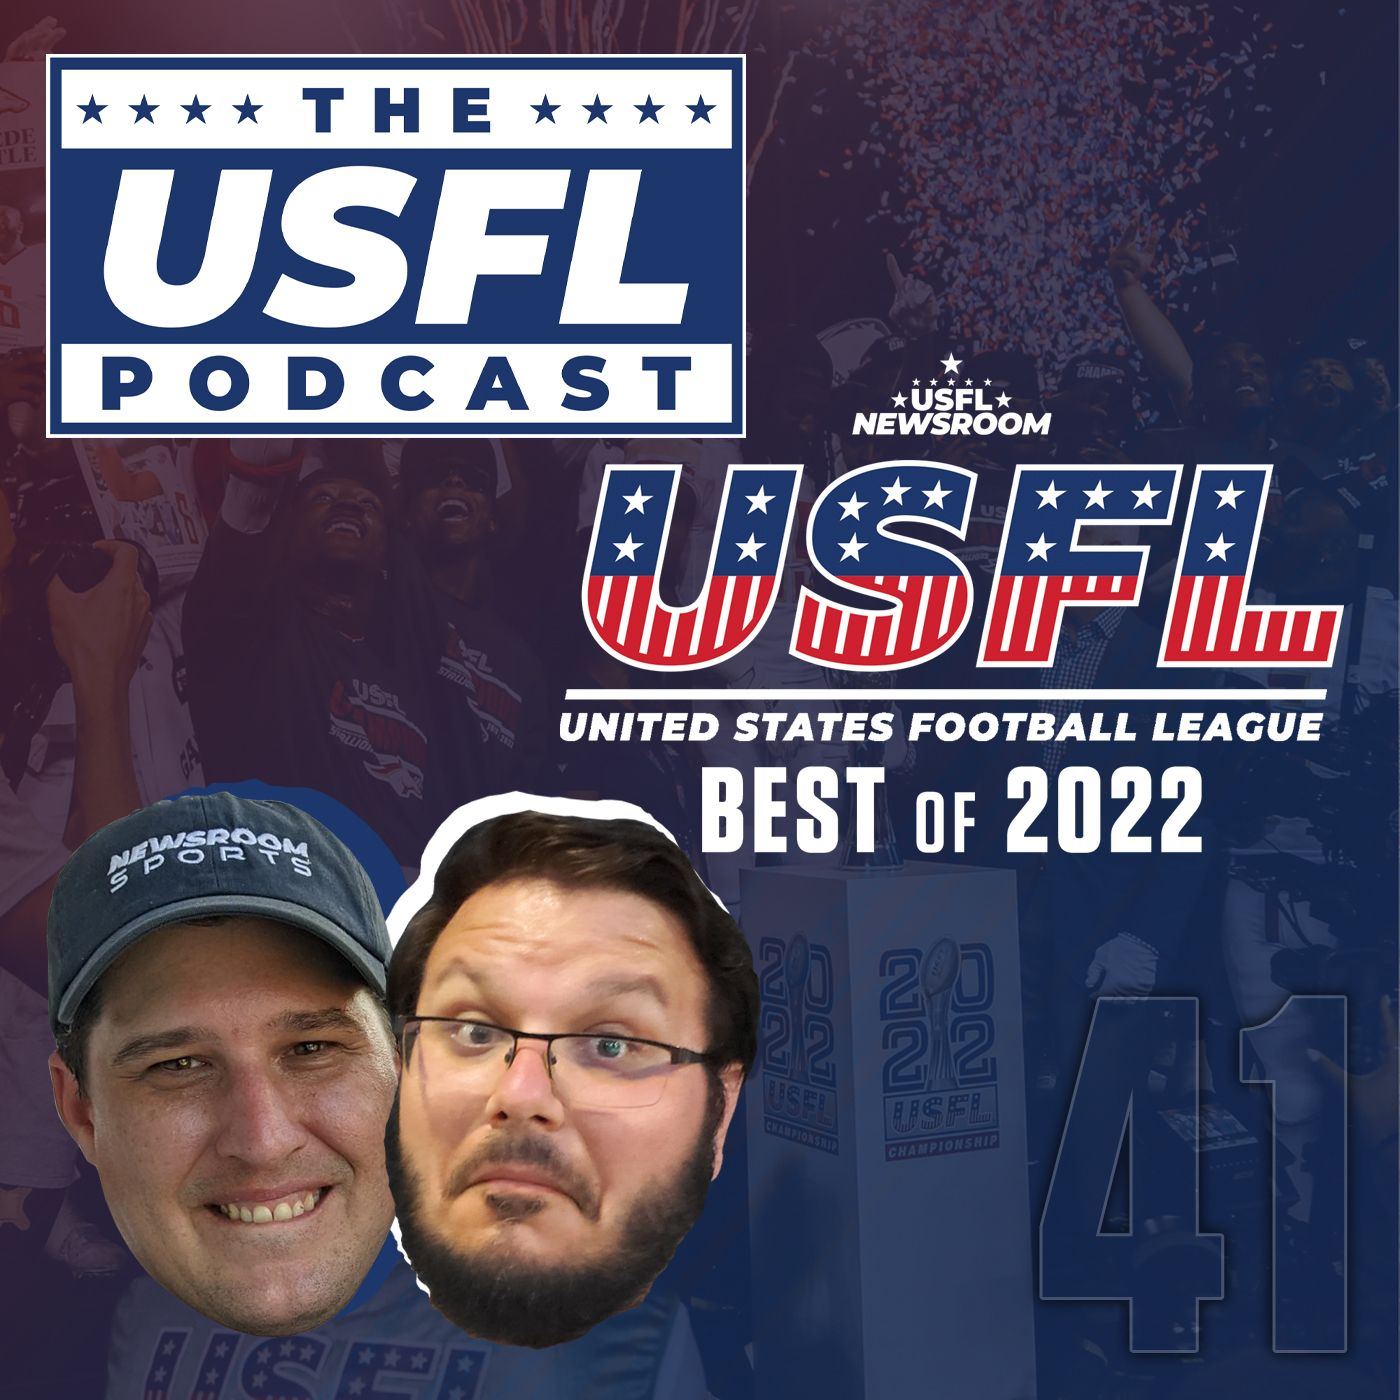 USFL: Best of 2022 | USFL Podcast #41